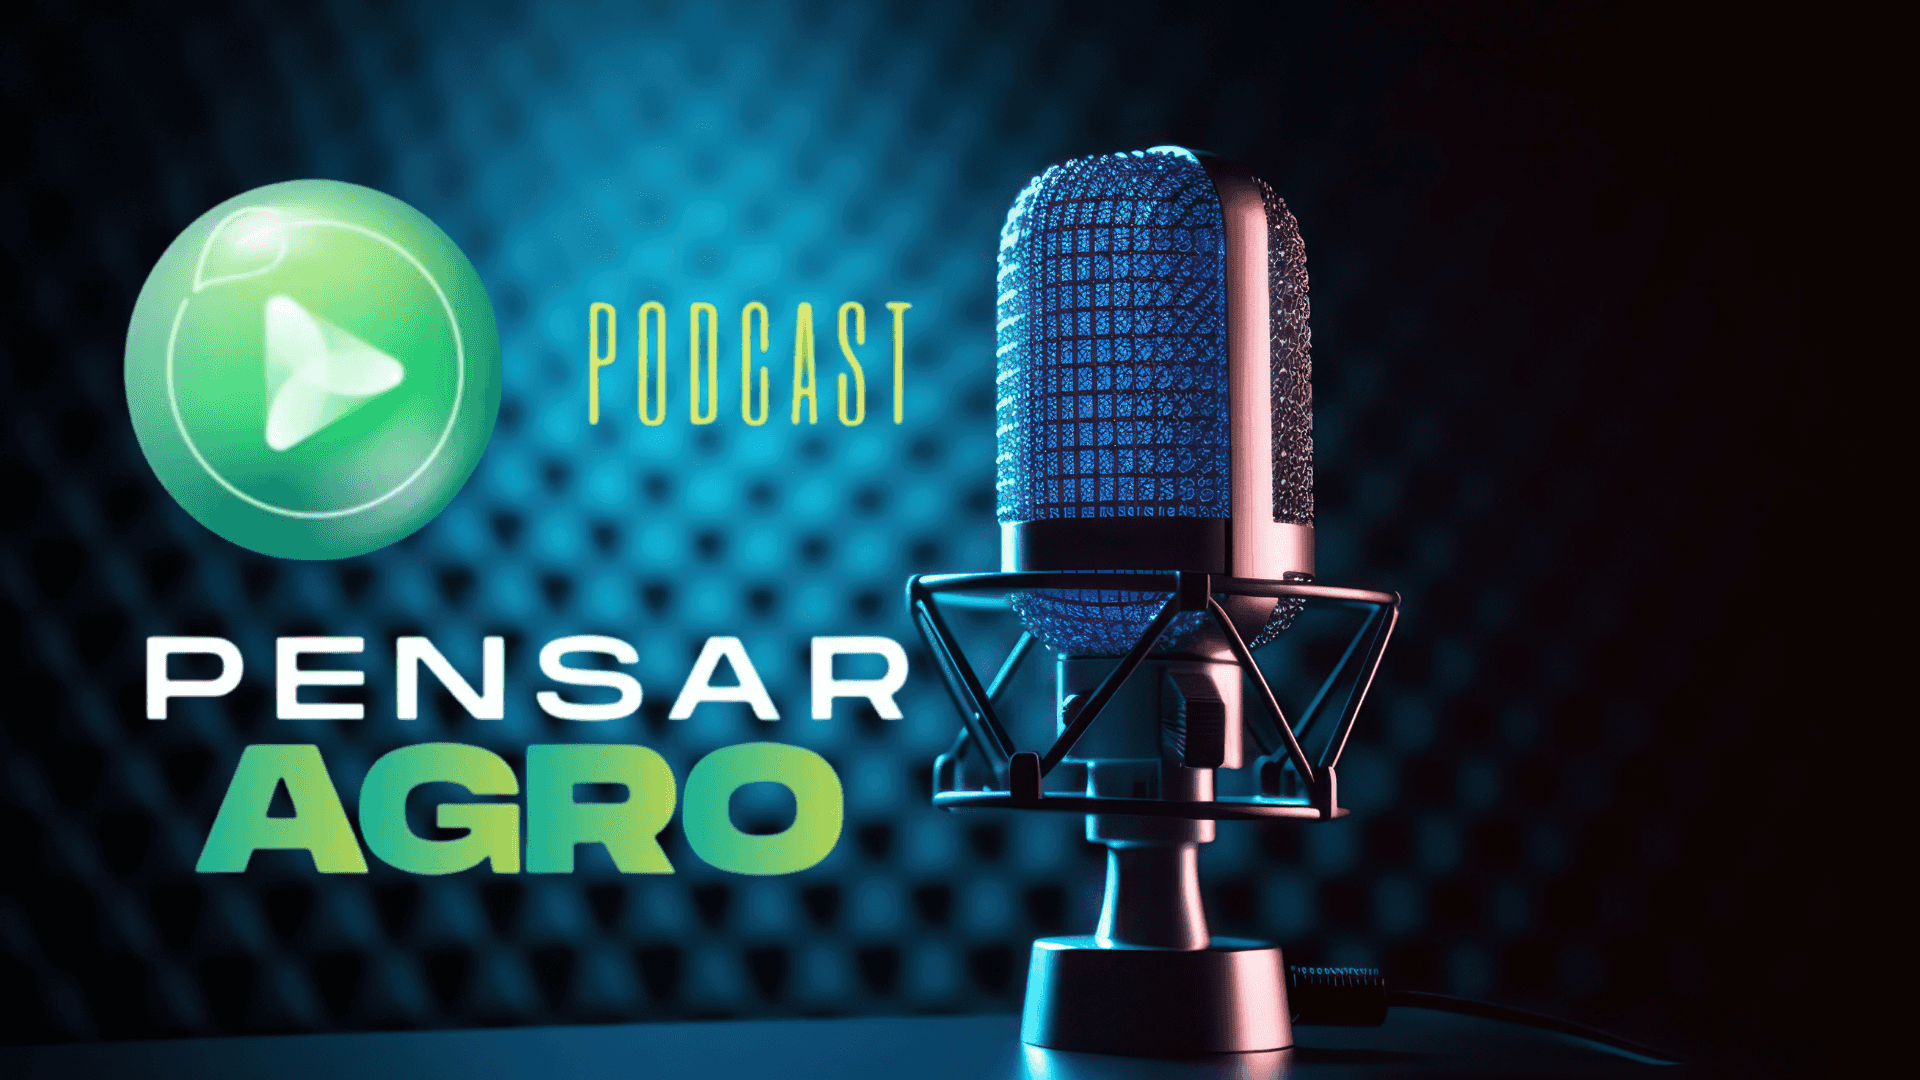 Podcast Pensar Agro